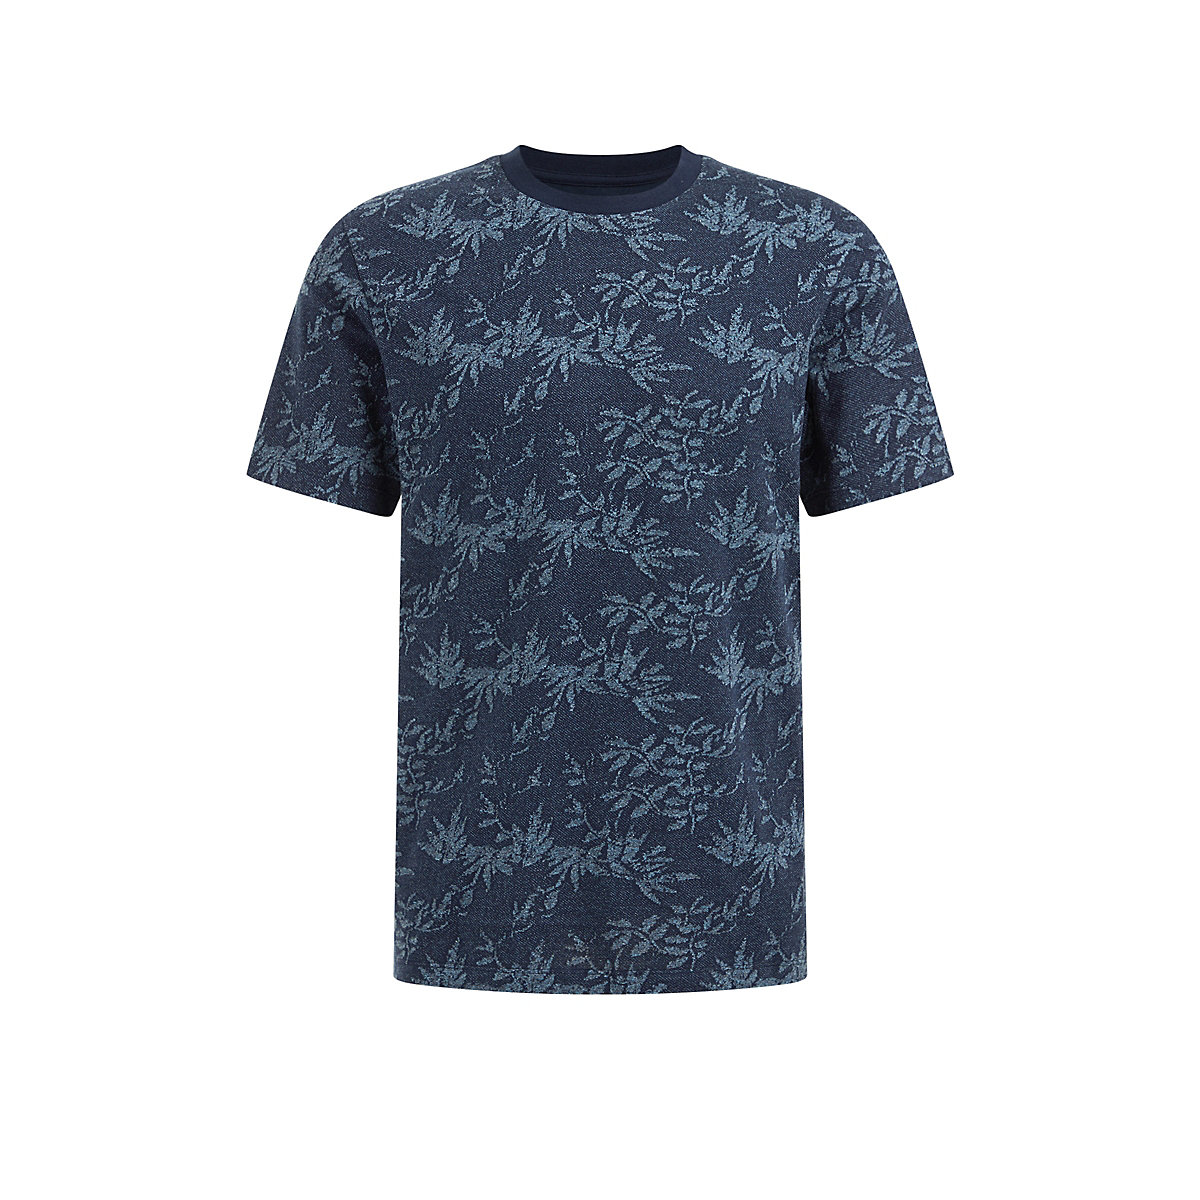 WE Fashion Herren-T-Shirt mit Muster T-Shirts blau